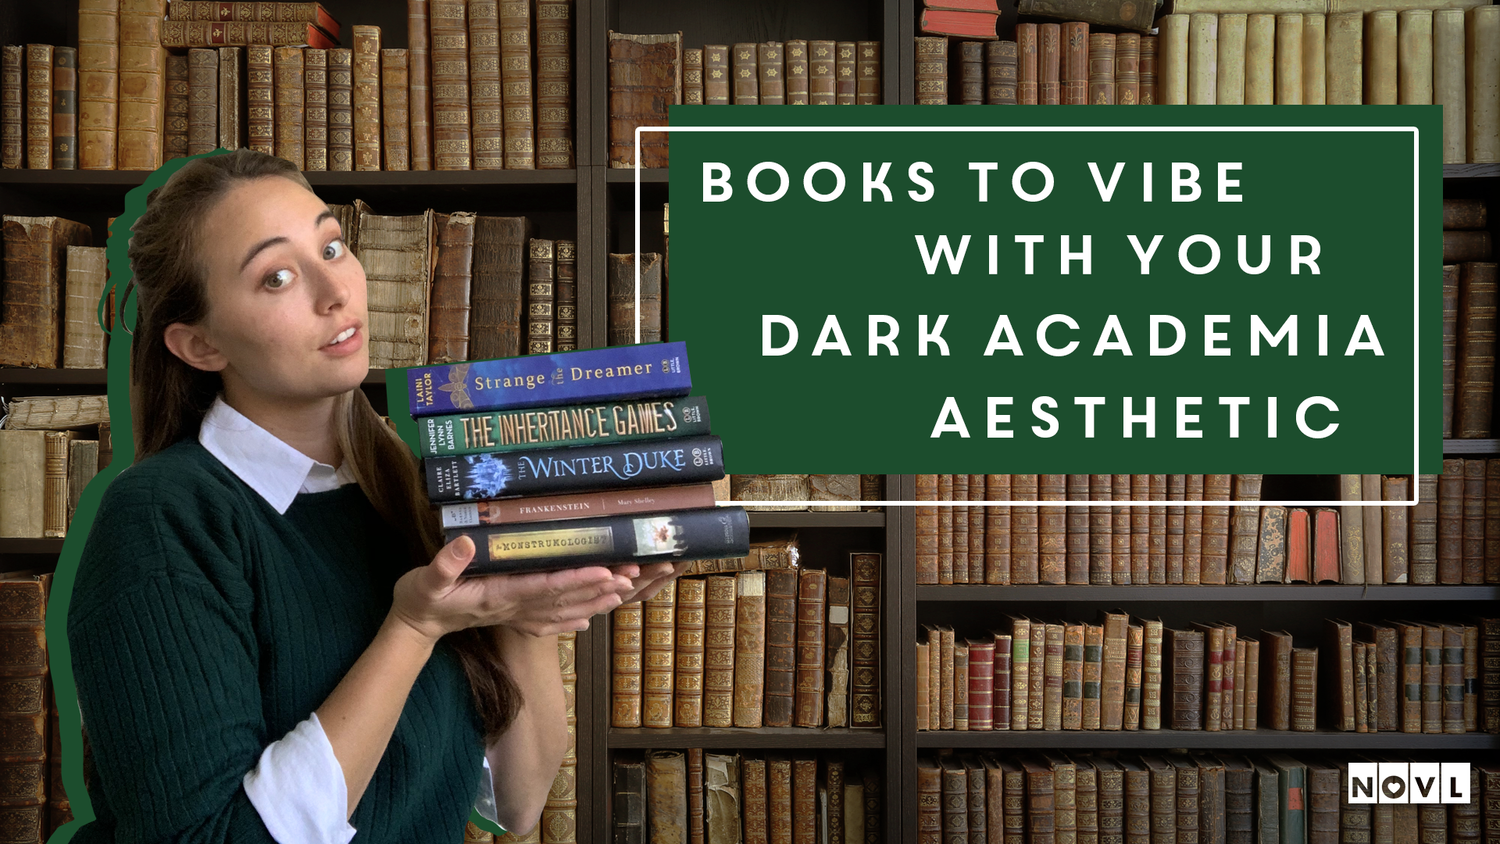 Books to vibe with your dark academia aesthetic • NOVL